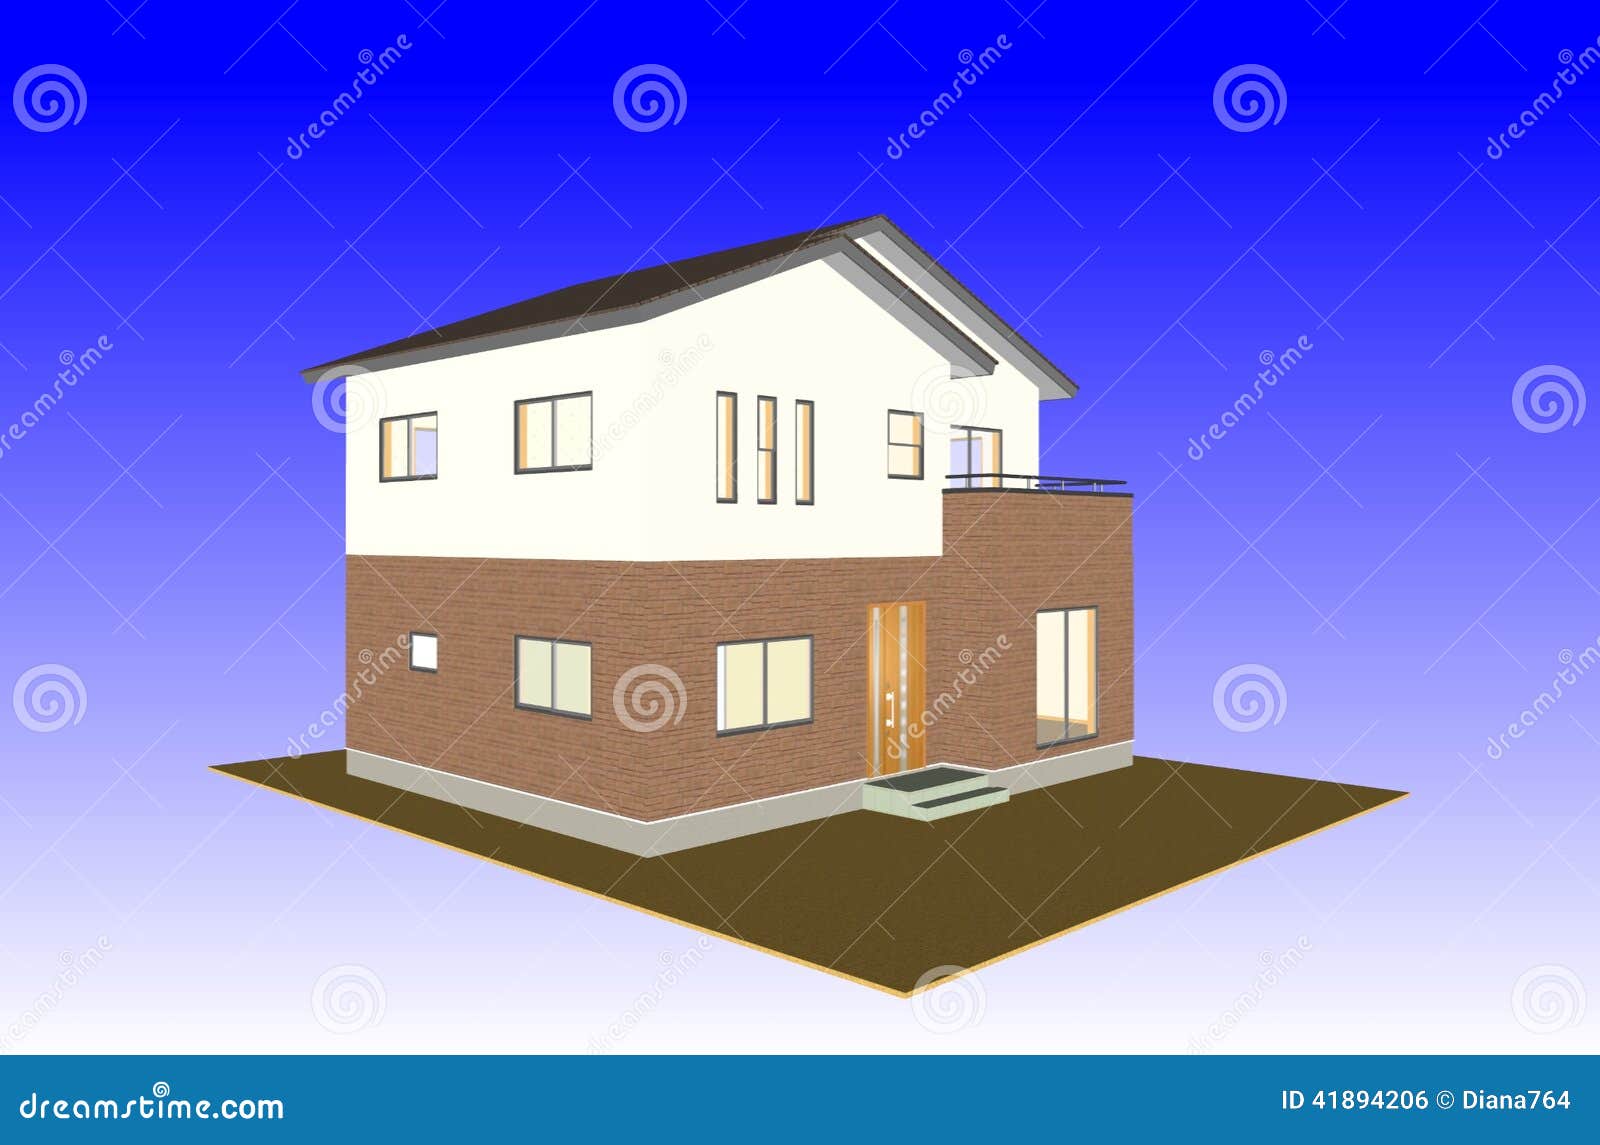 House illustration on the blue-white background